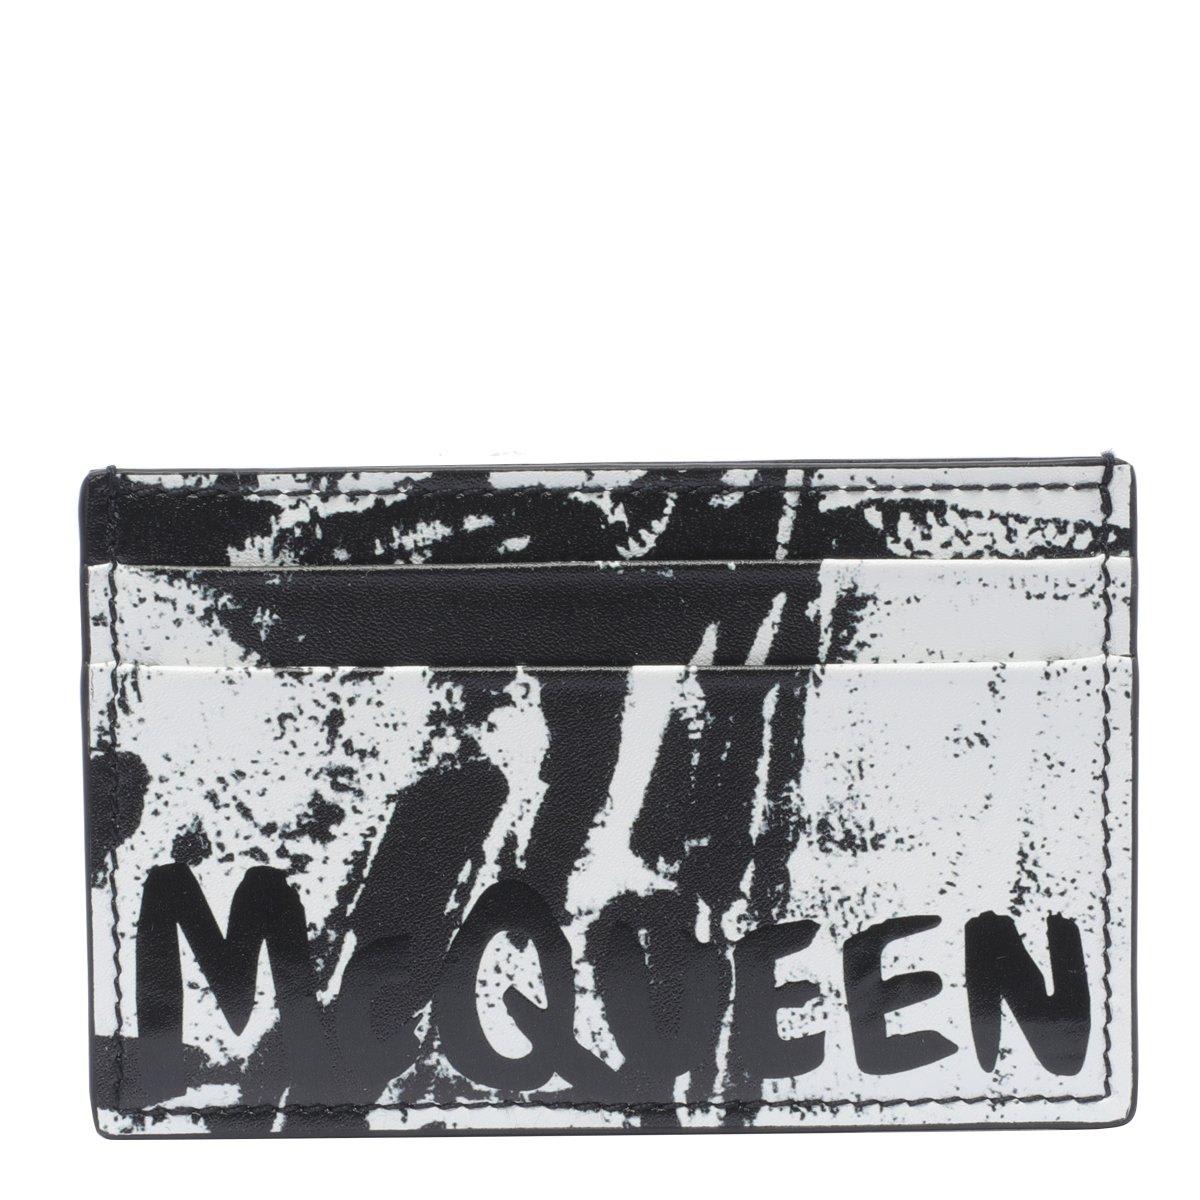 Alexander Mcqueen Logo Printed Cardholder In Black